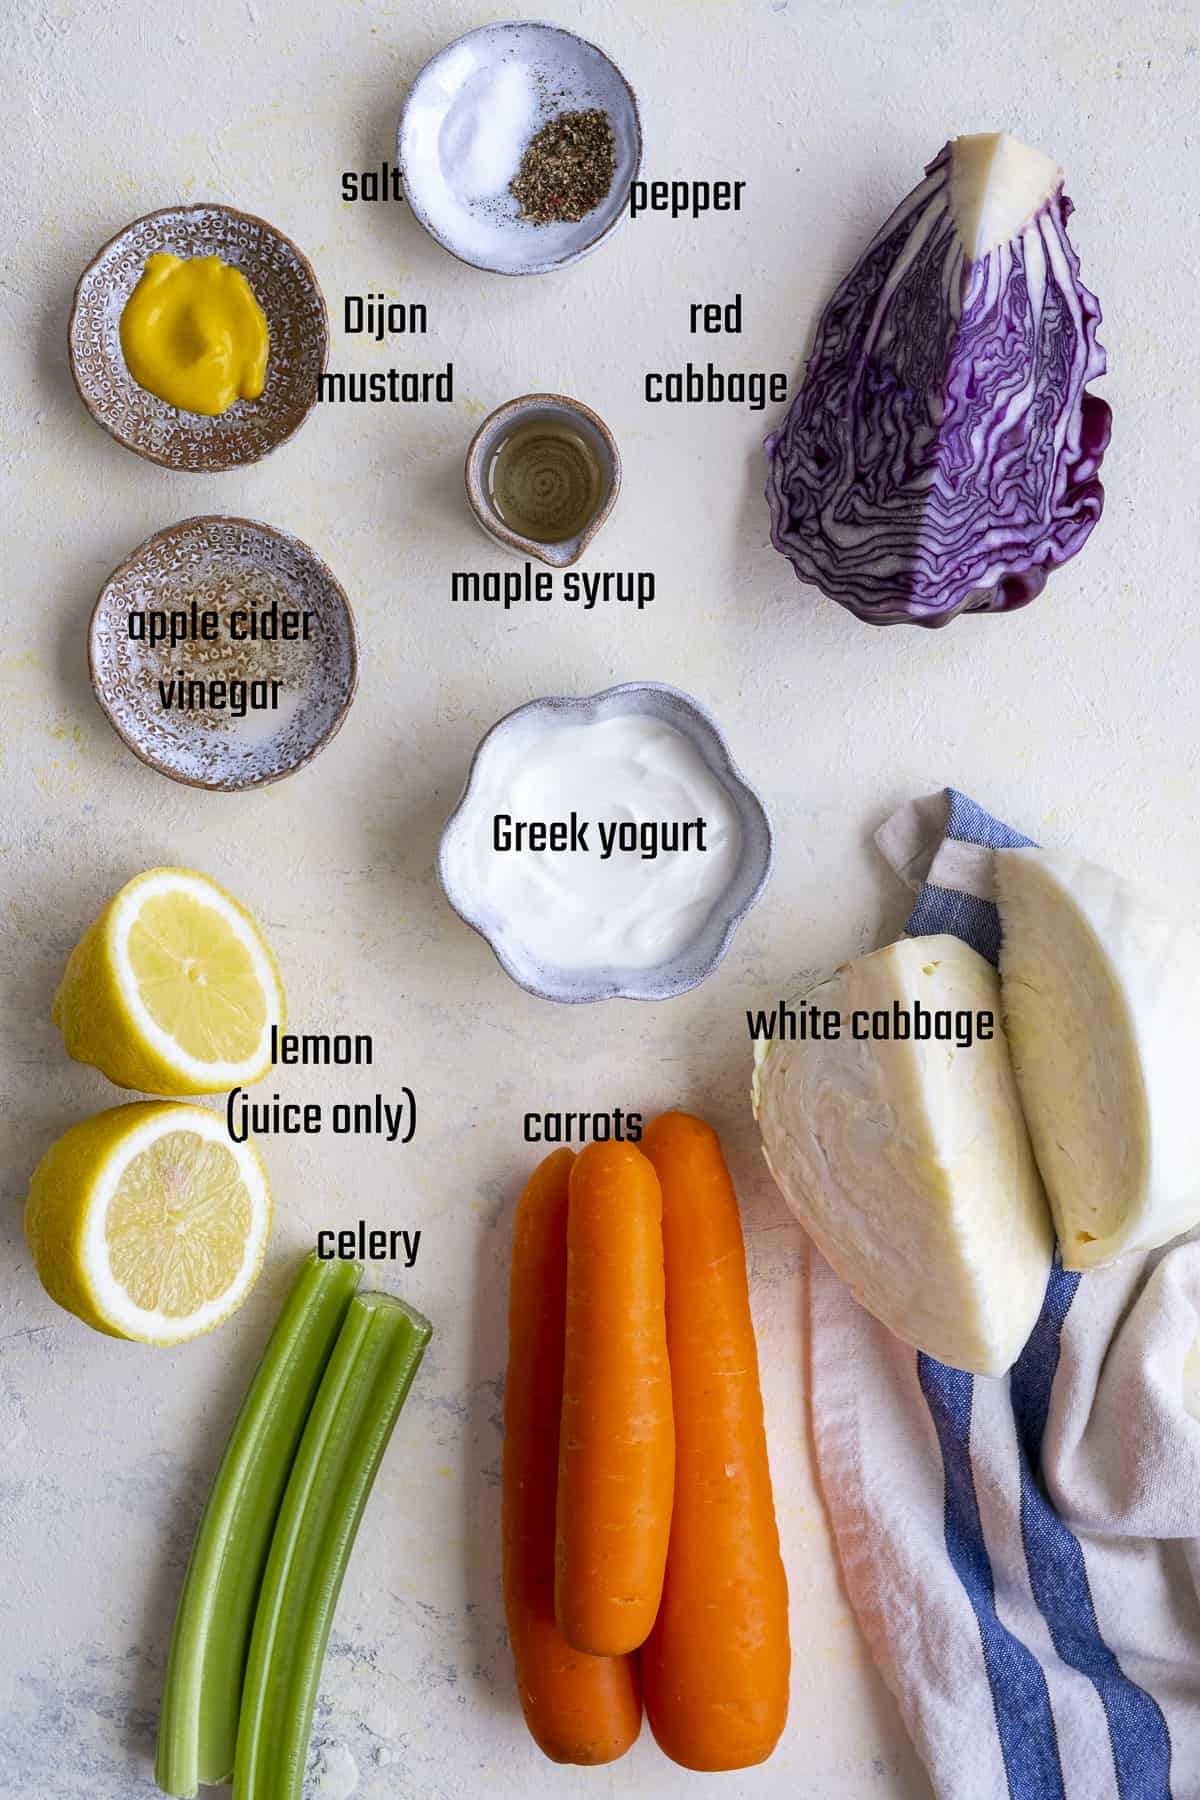 Red cabbage, white cabbage, carrots, lemon, celery ribs, Greek yogurt, Dijon mustard, vinegar, maple syrup, salt and pepper on a light background.